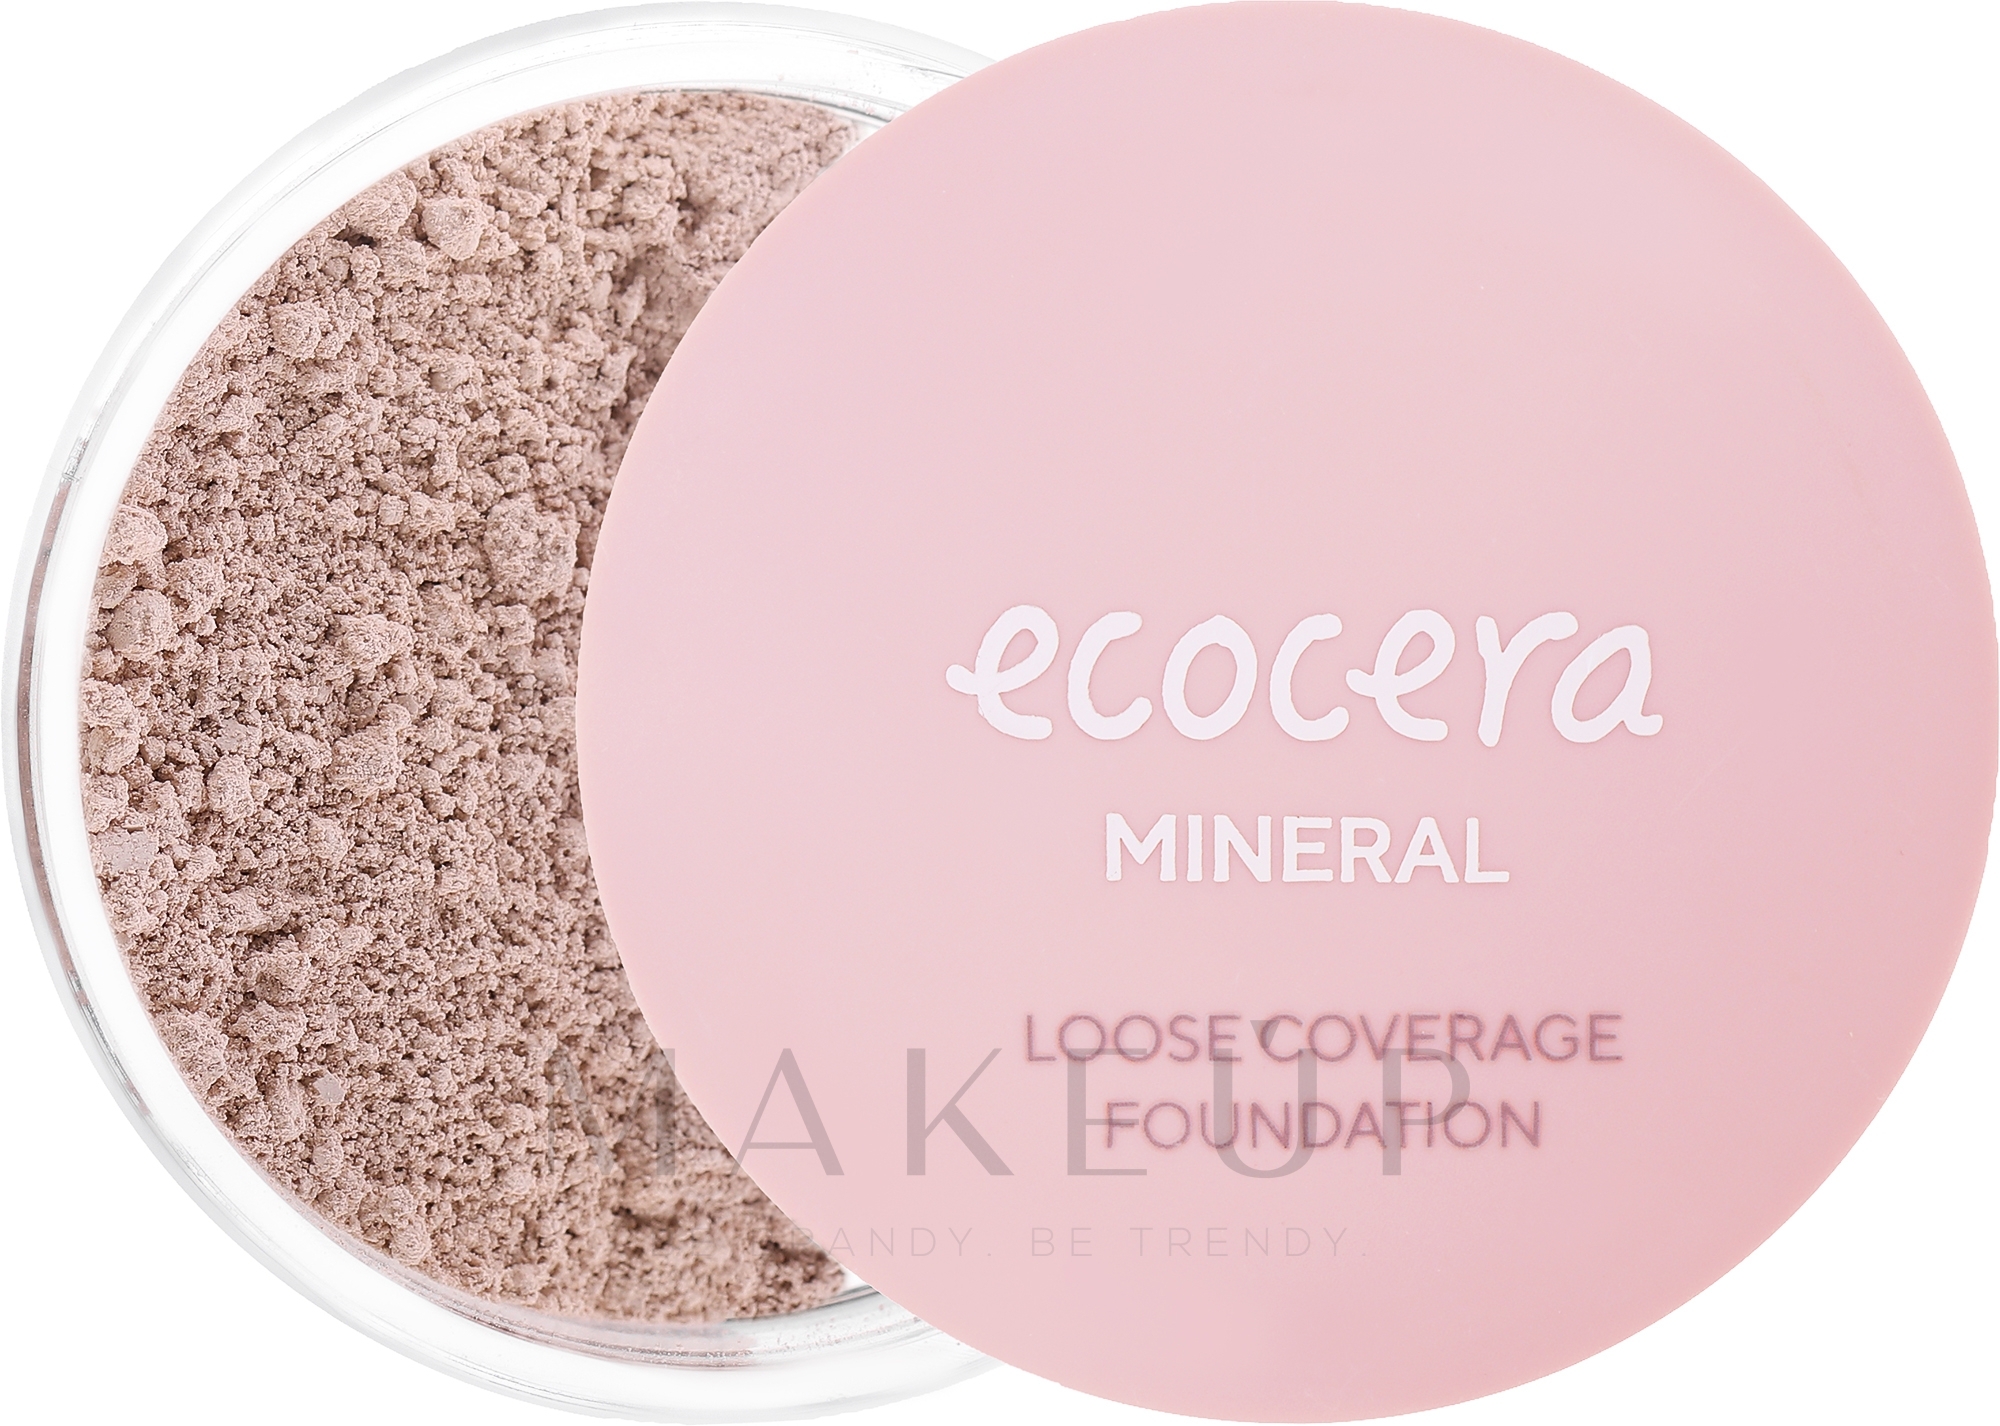 Lose mineralische Foundation - Ecocera Mineral Covering Loose Foundation — Bild C1 - Dublin